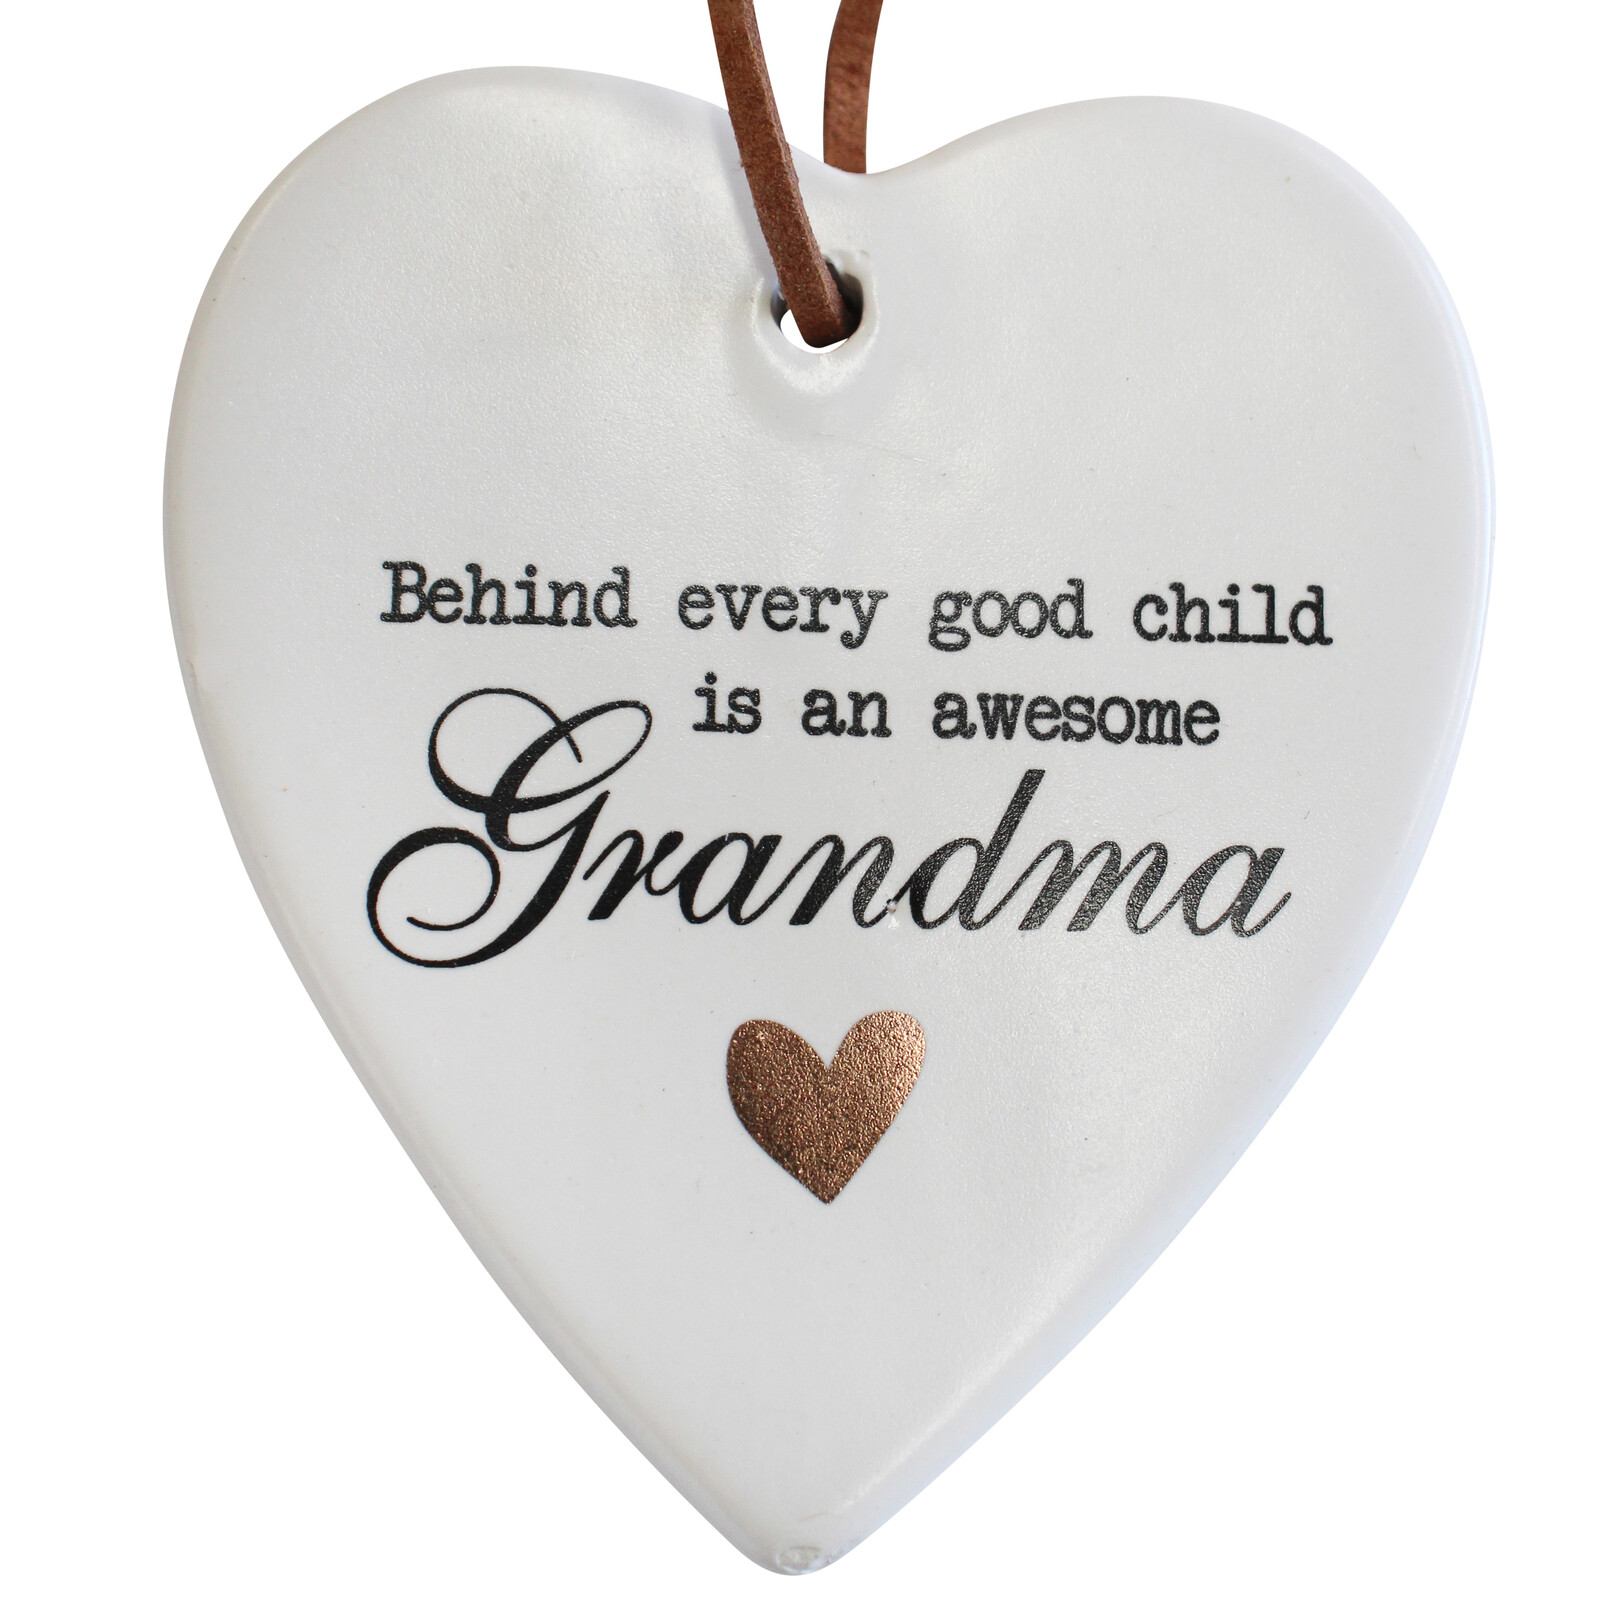 Hanging Heart Grandma